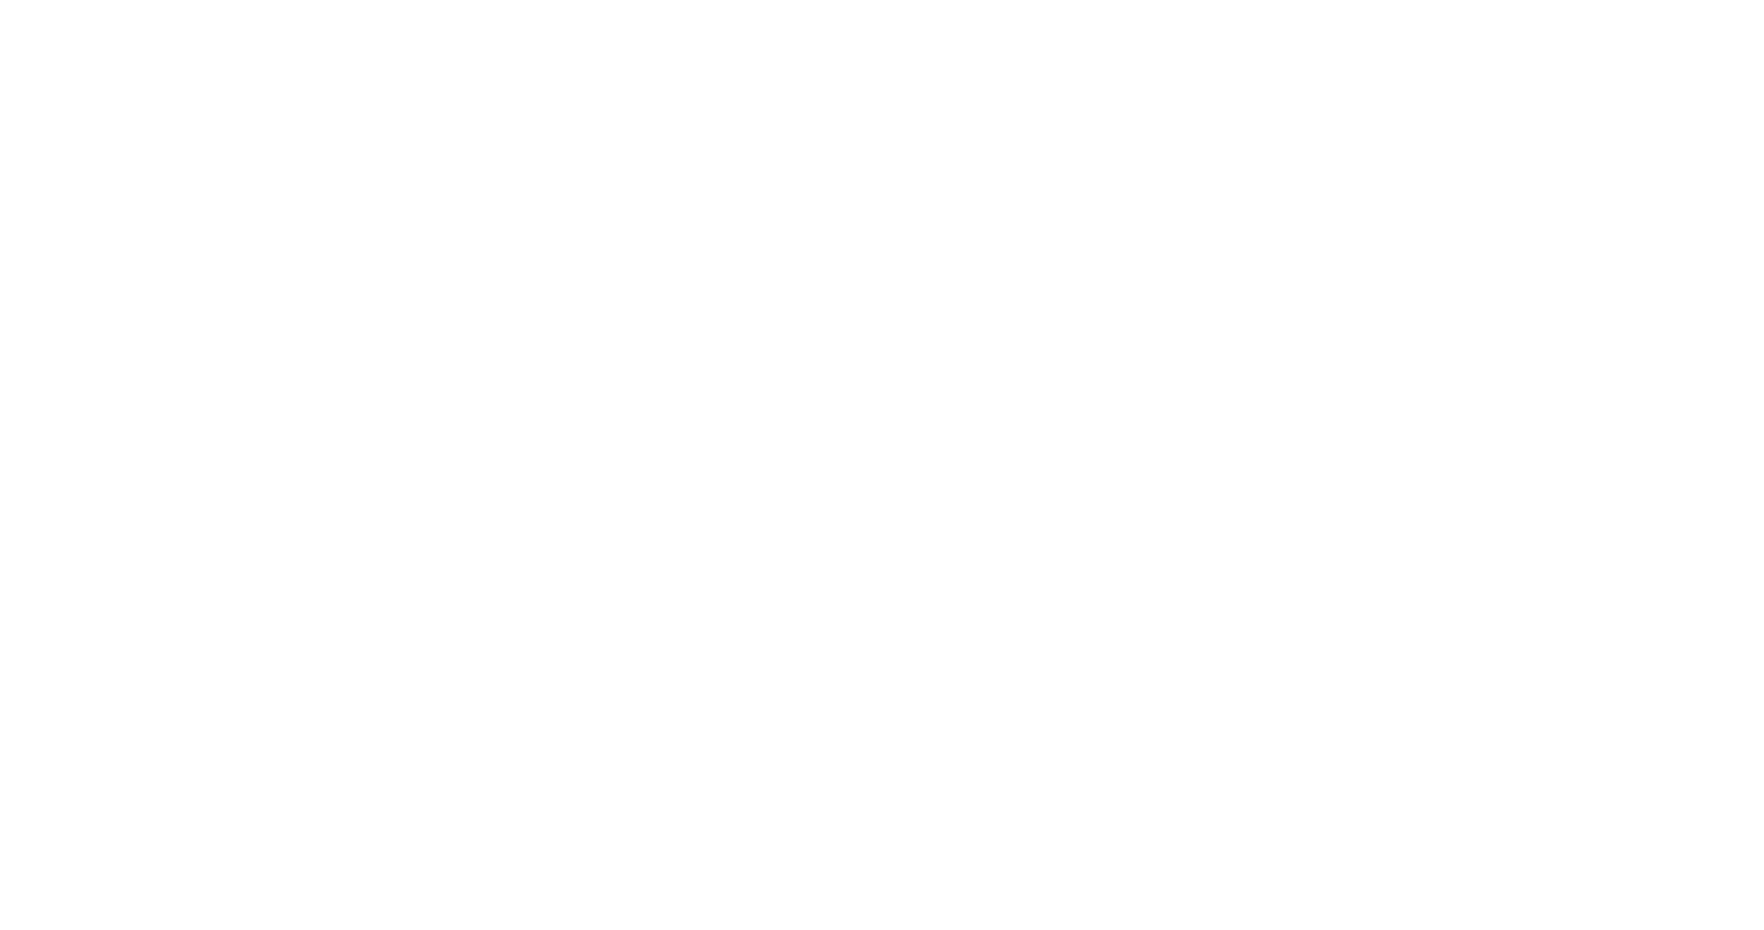 Decoratori-Bassanesi-logo